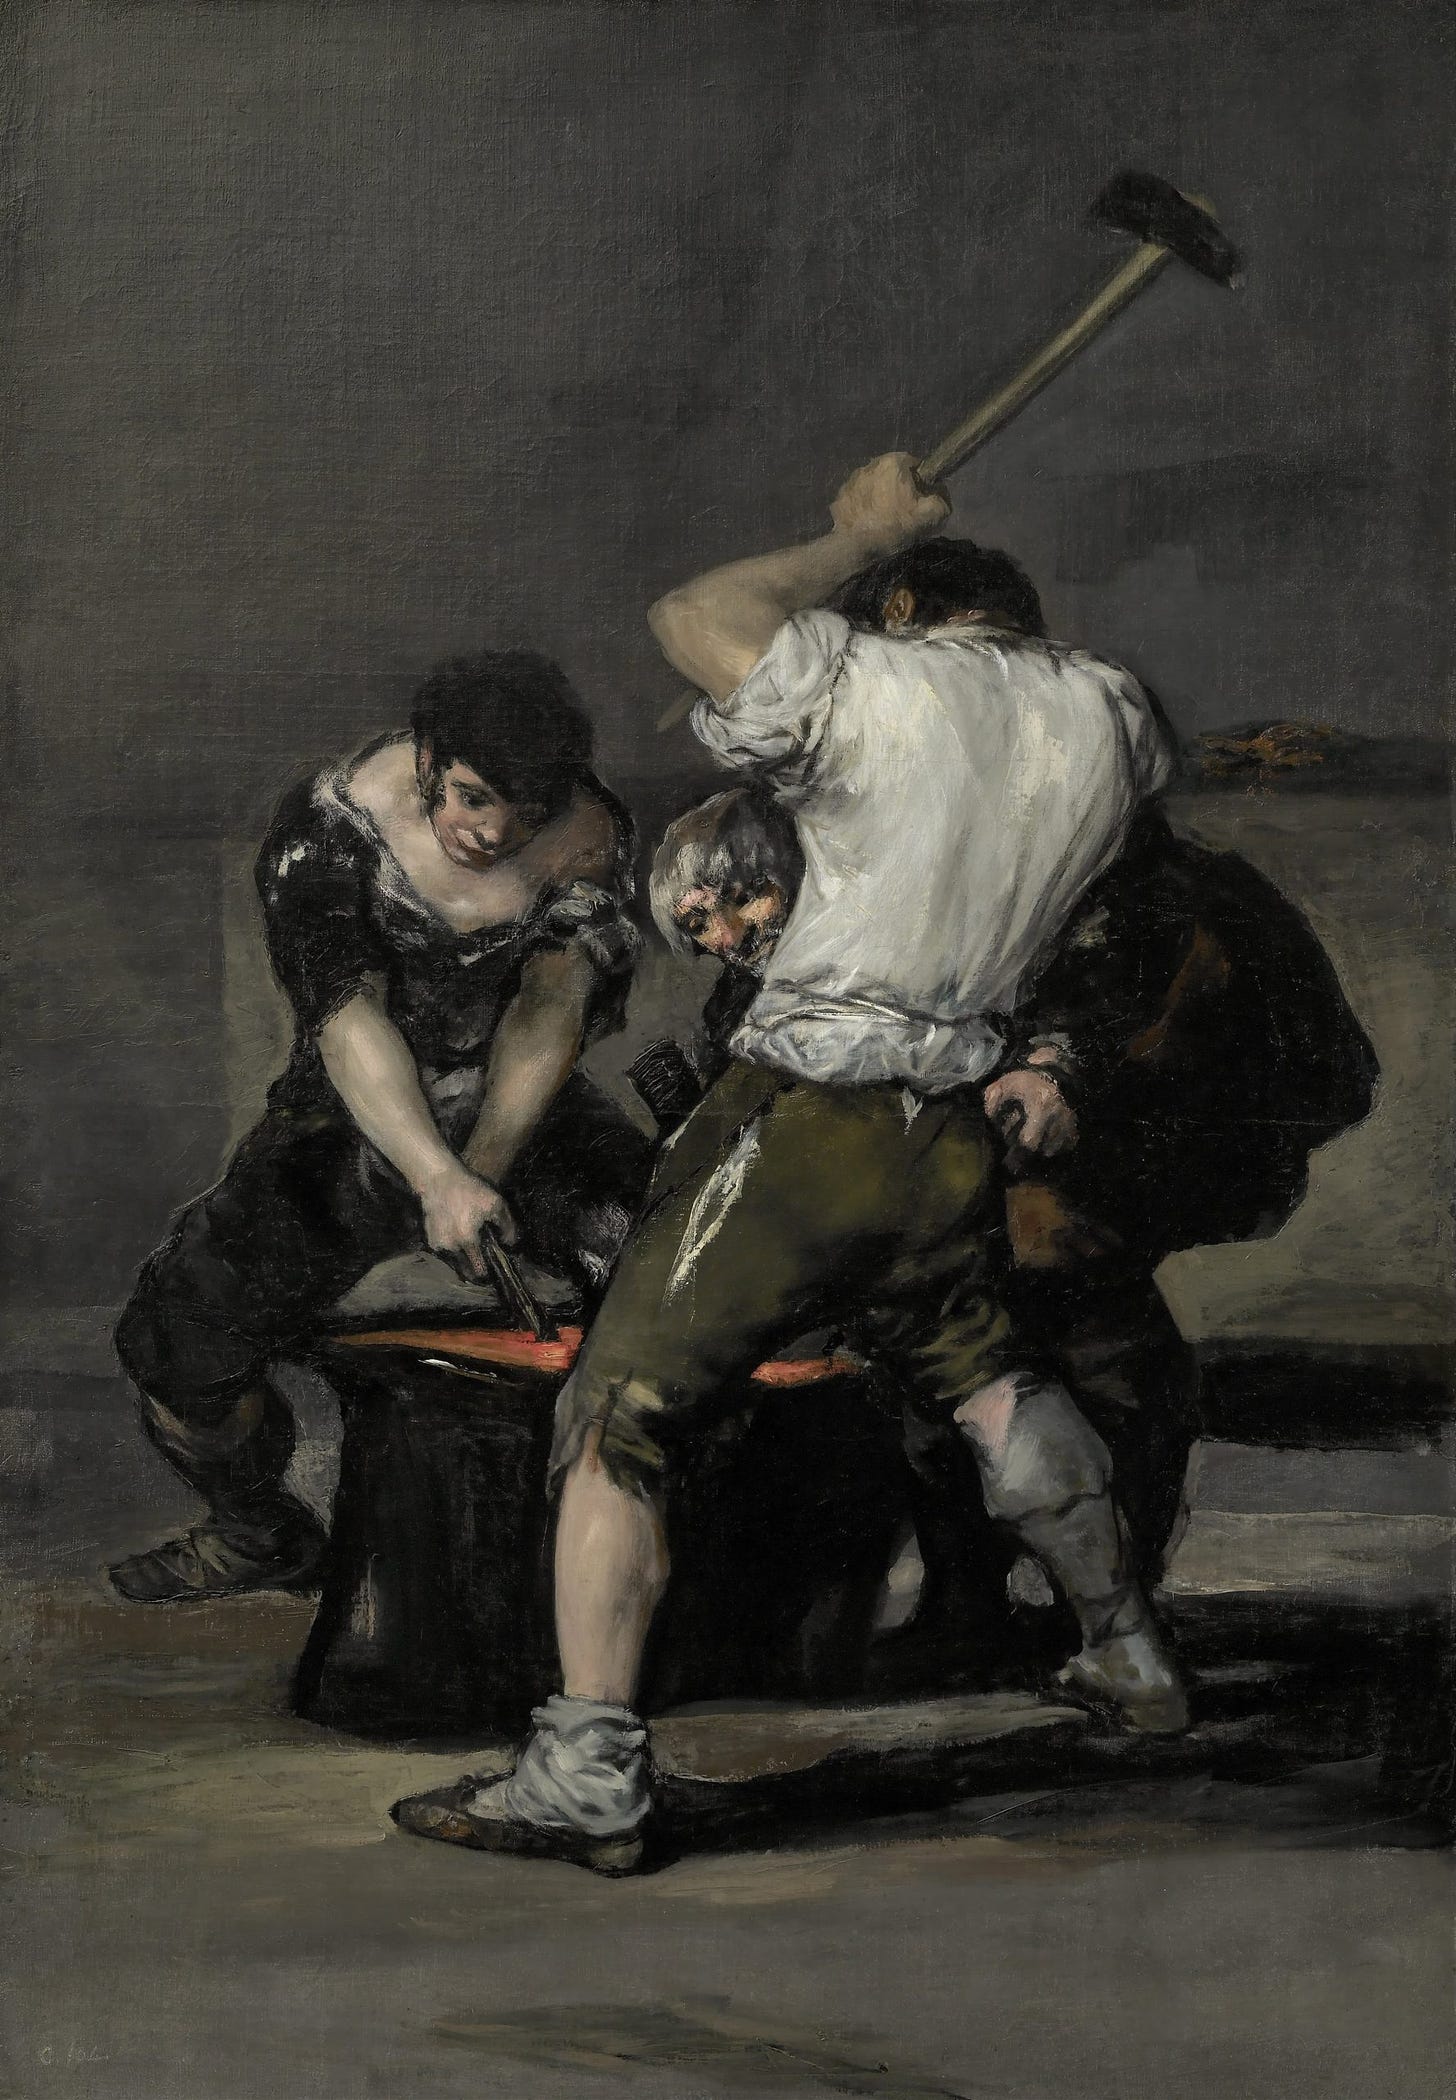 The Forge - Goya, Francisco - c